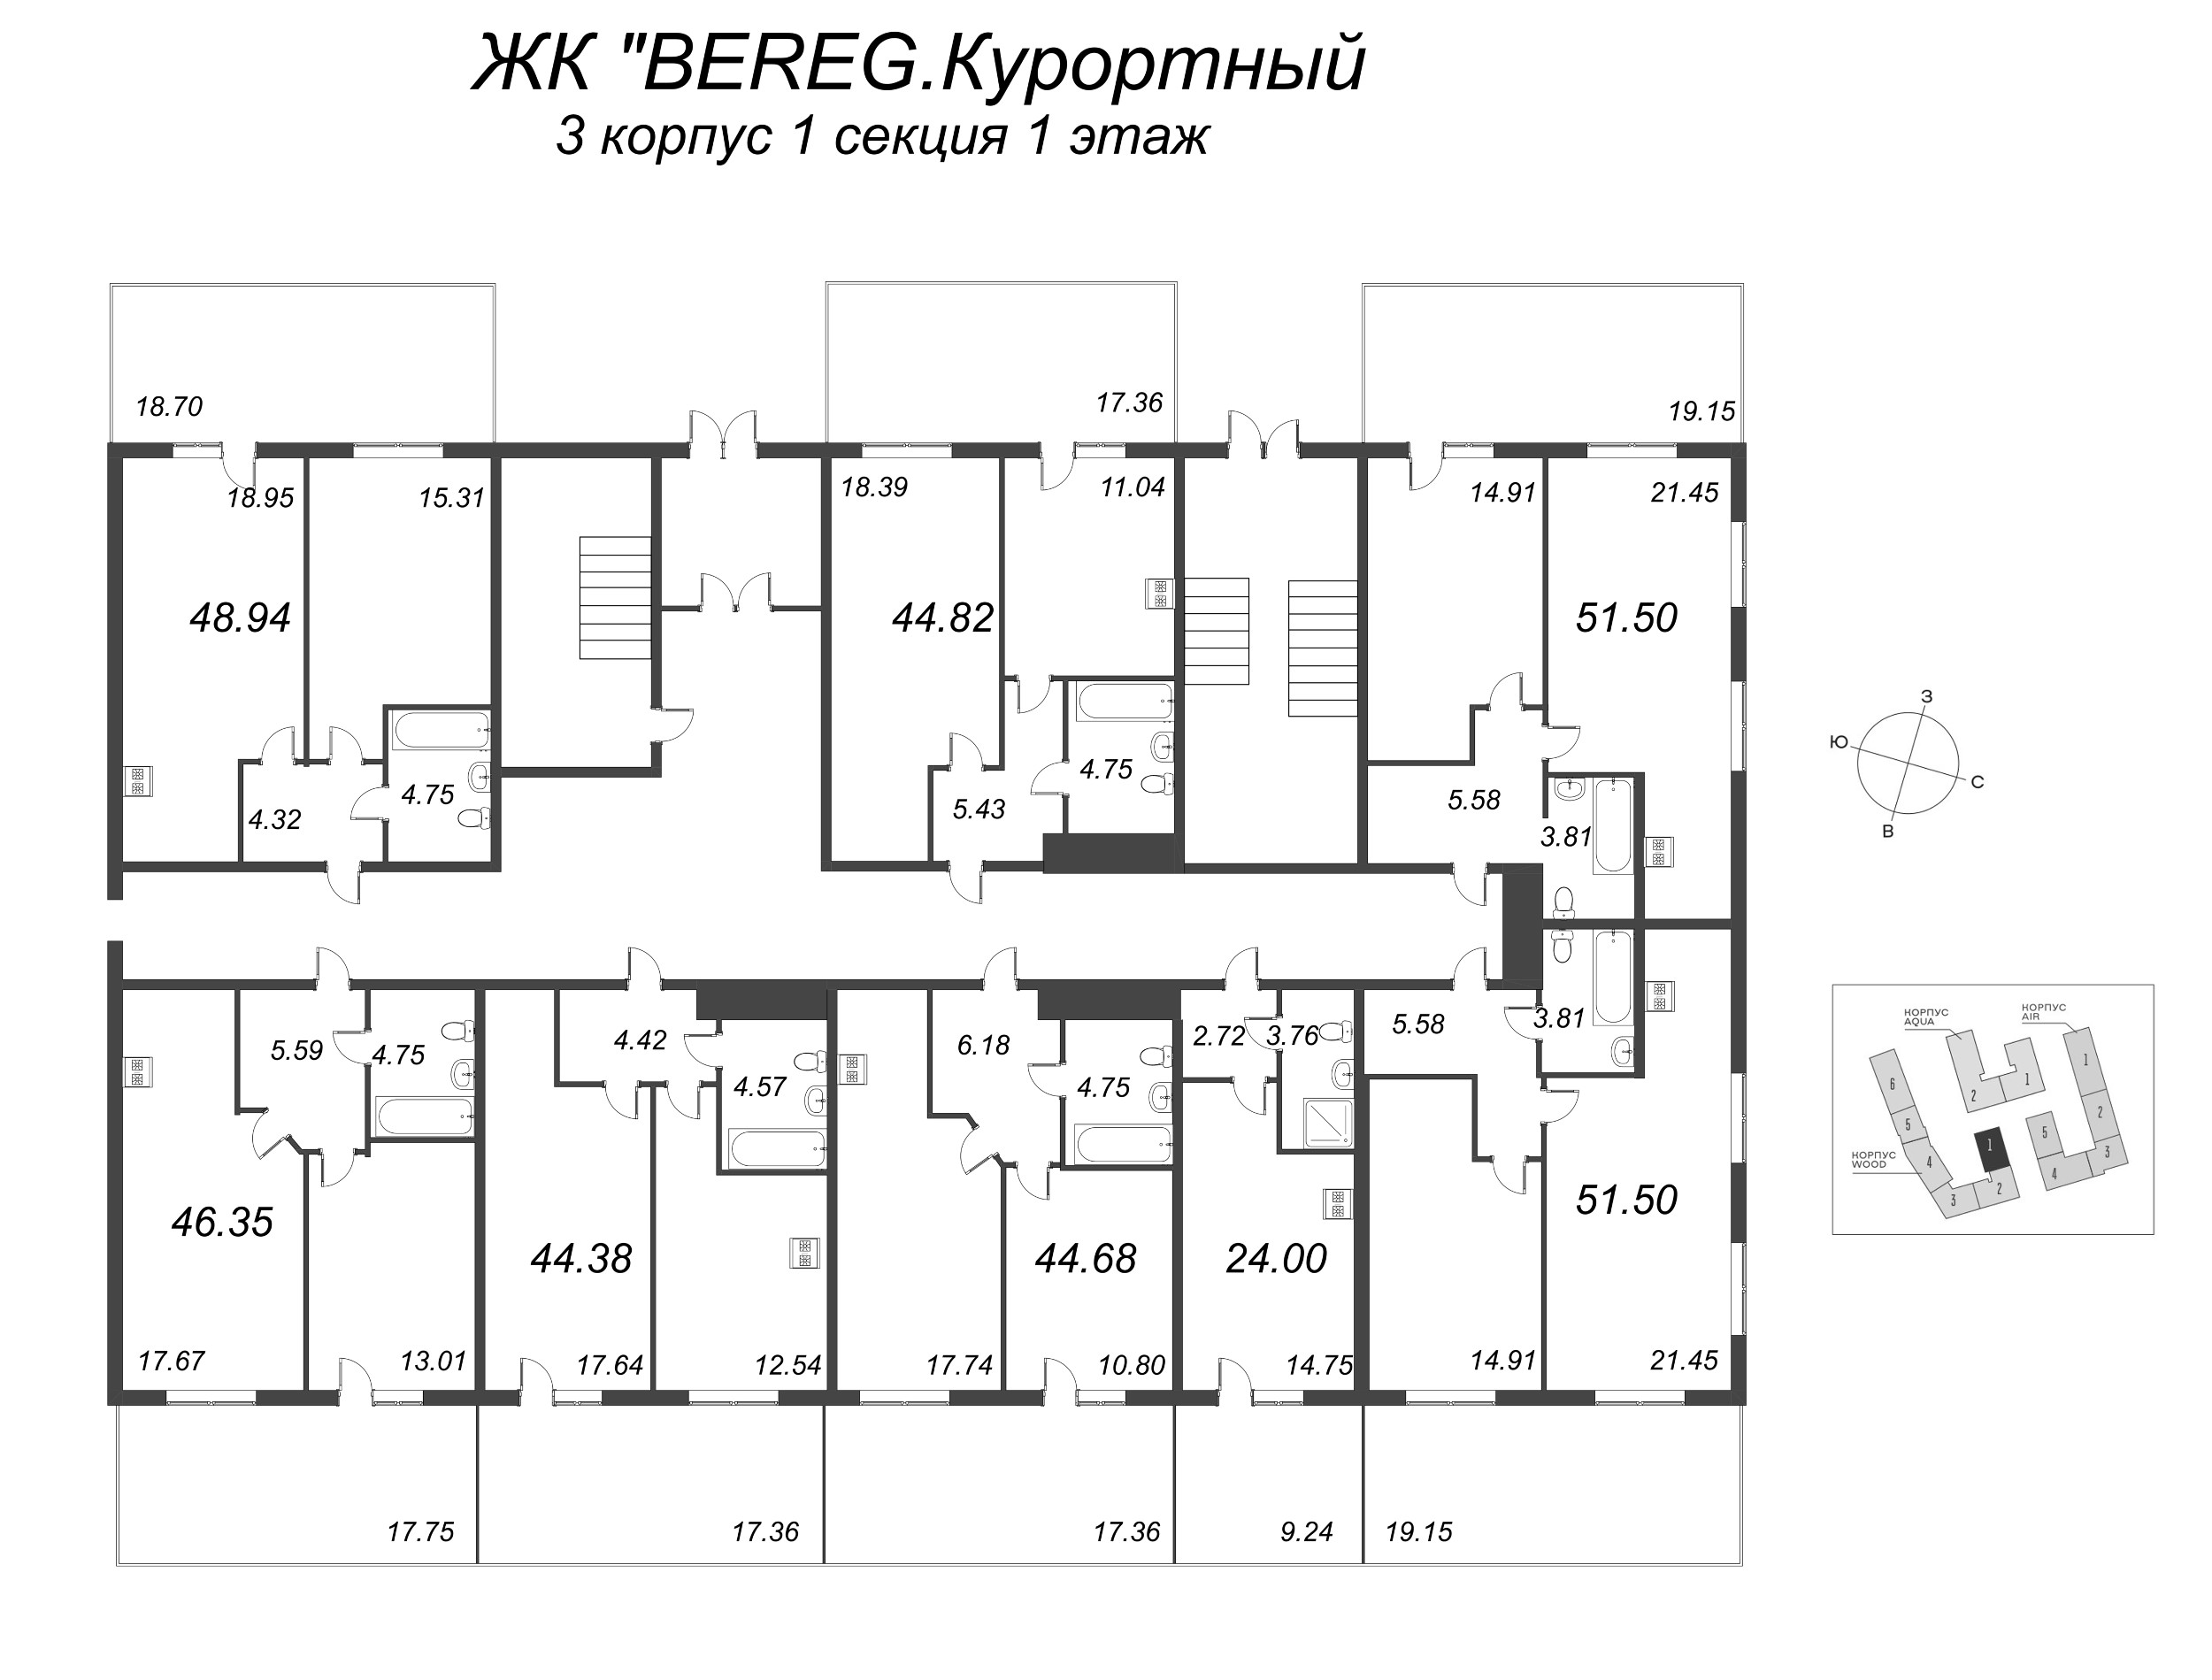 2-комнатная (Евро) квартира, 51.5 м² - планировка этажа